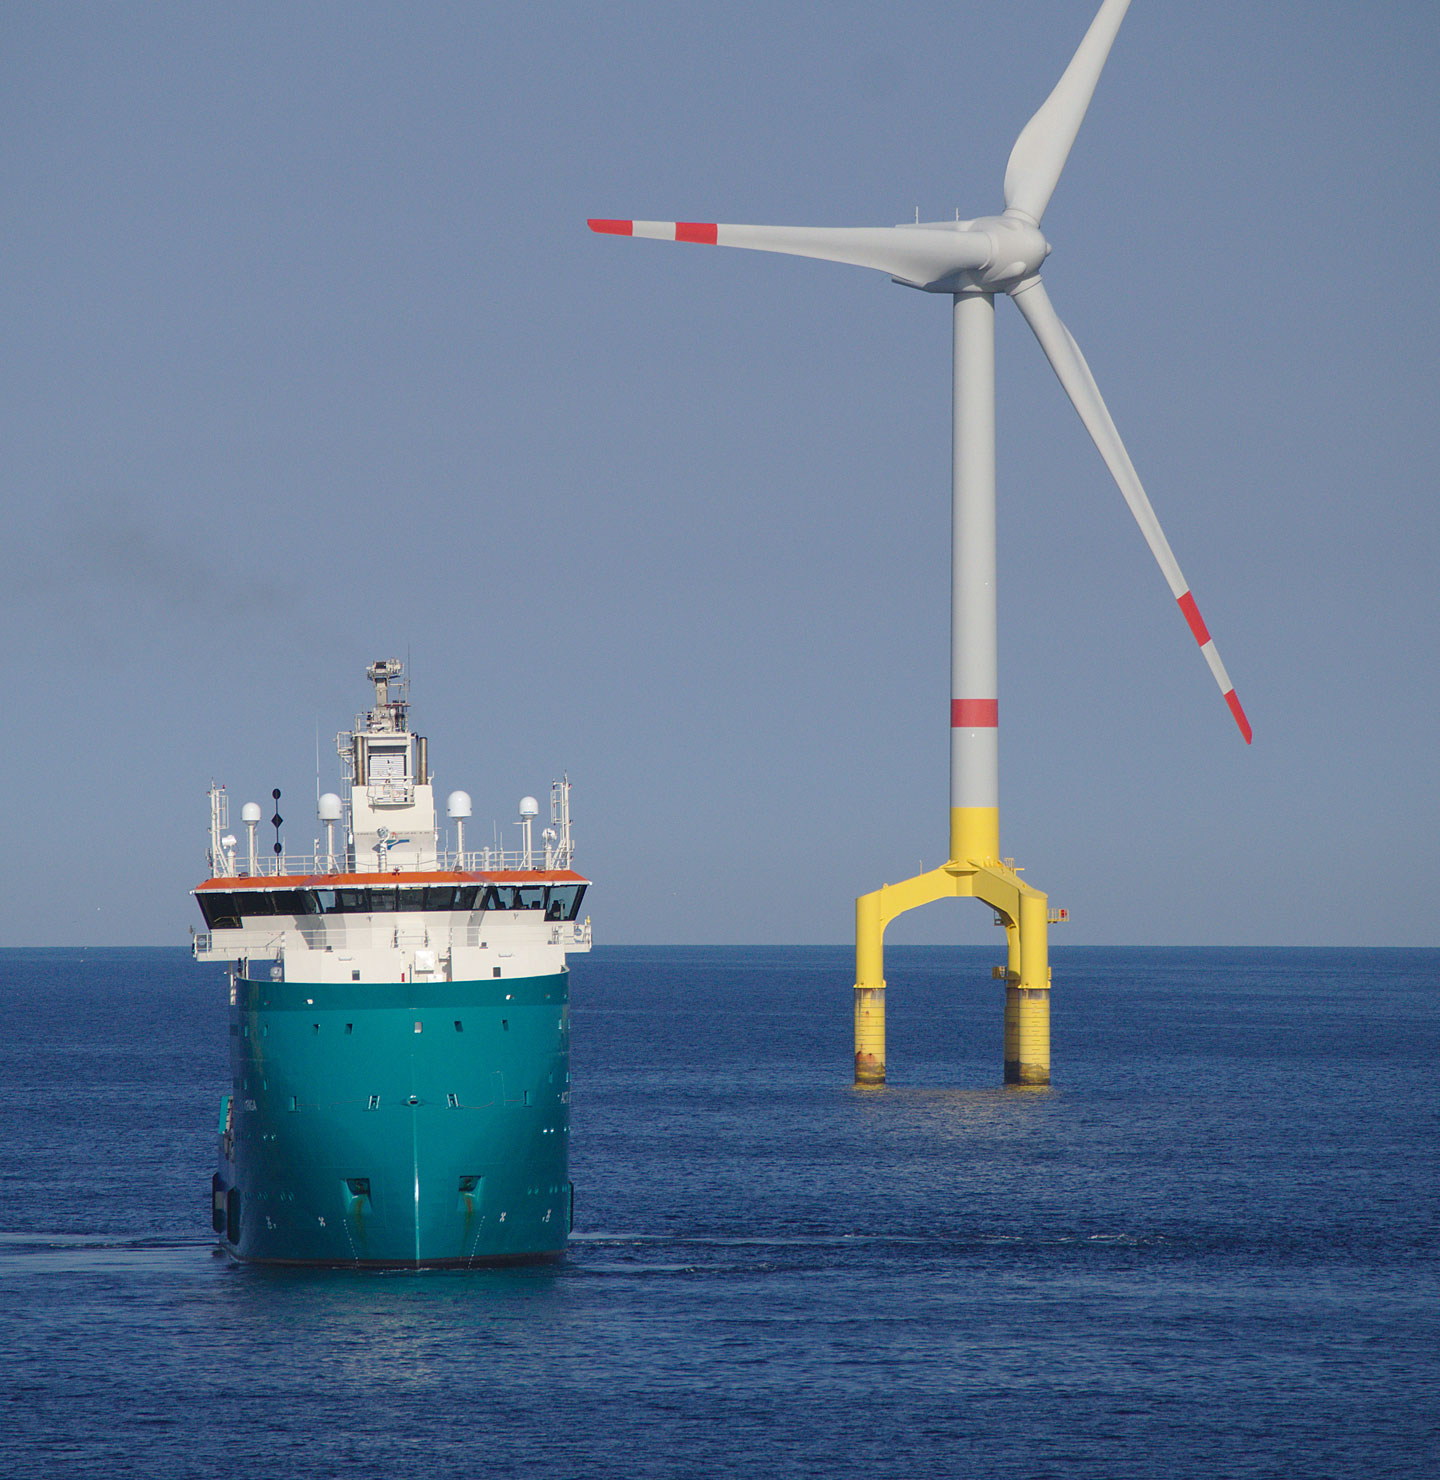 Ship next to a wind turbine.